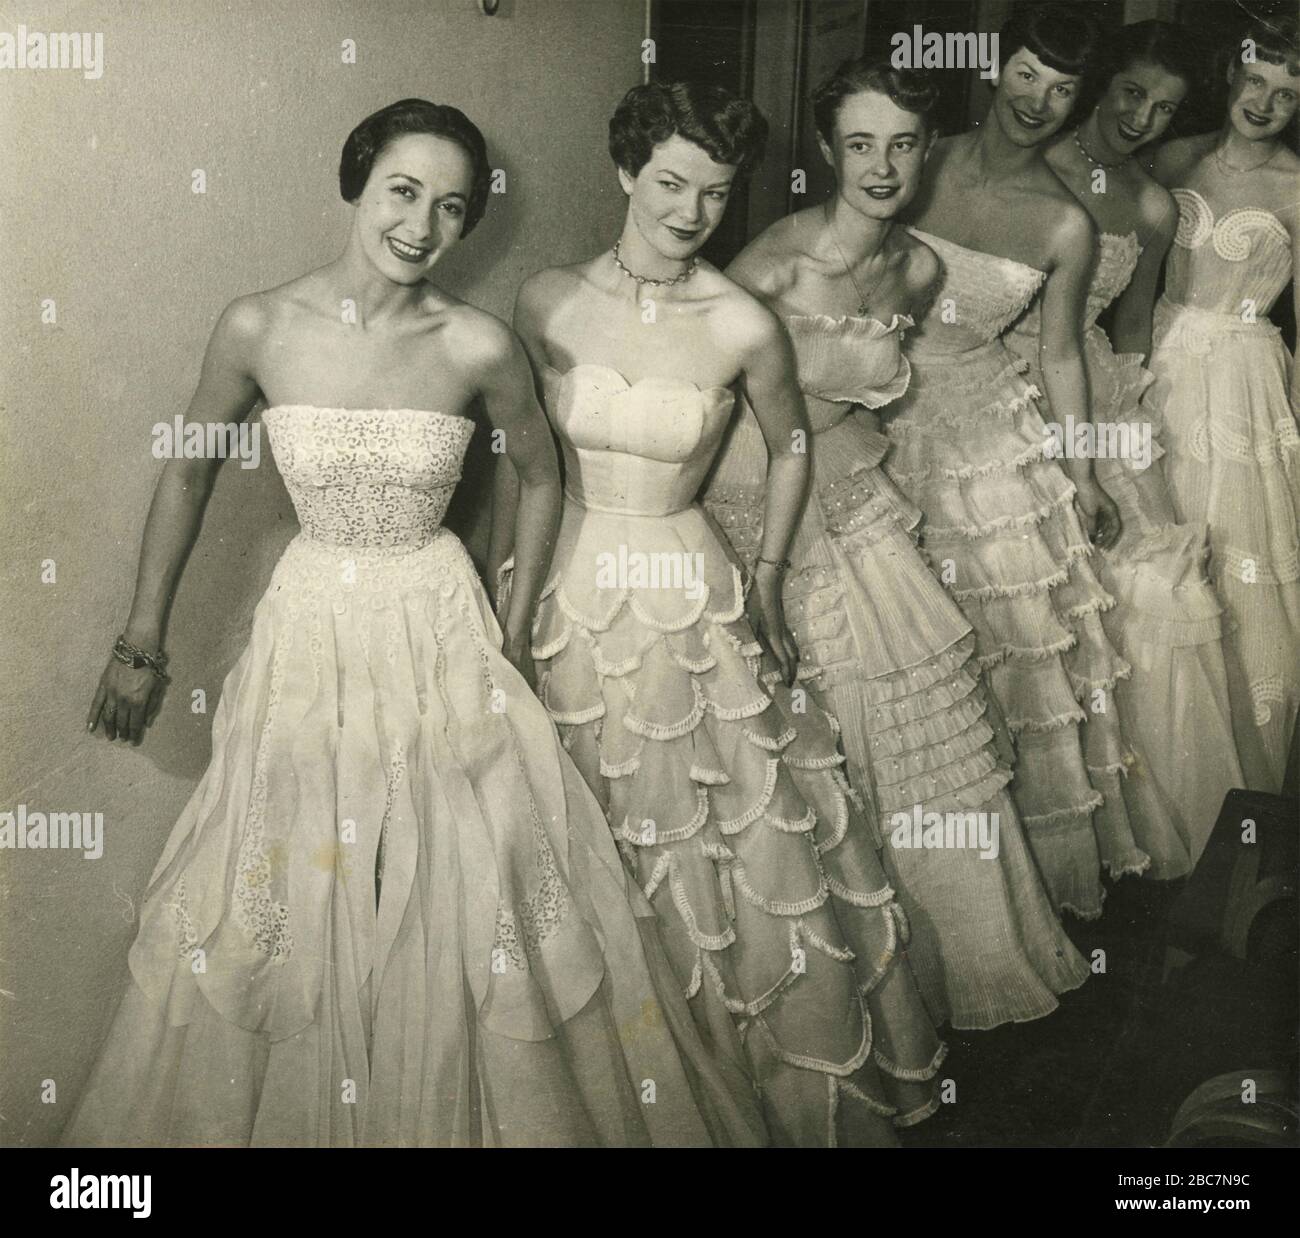 Symphony in white, evento presentado por la compañía francesa de moda Carven, París, Francia 1950 Foto de stock